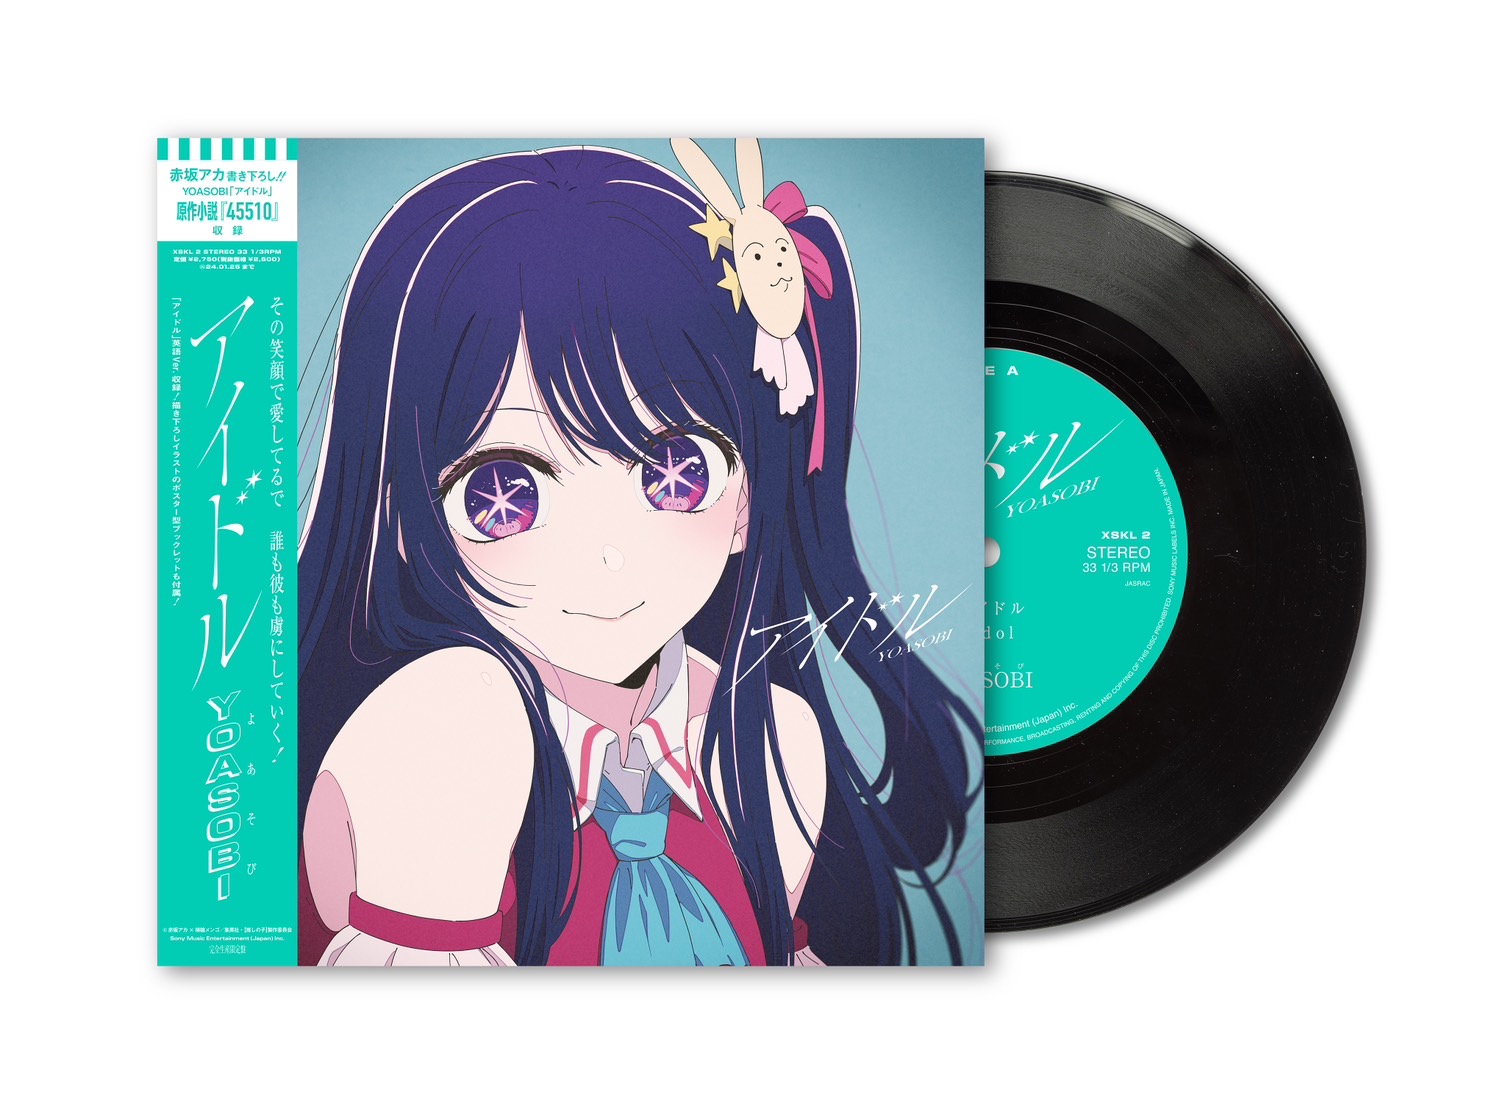 YOASOBI アイドル アナログ盤 完全生産限定盤 推しの子 メガジャケ - 邦楽